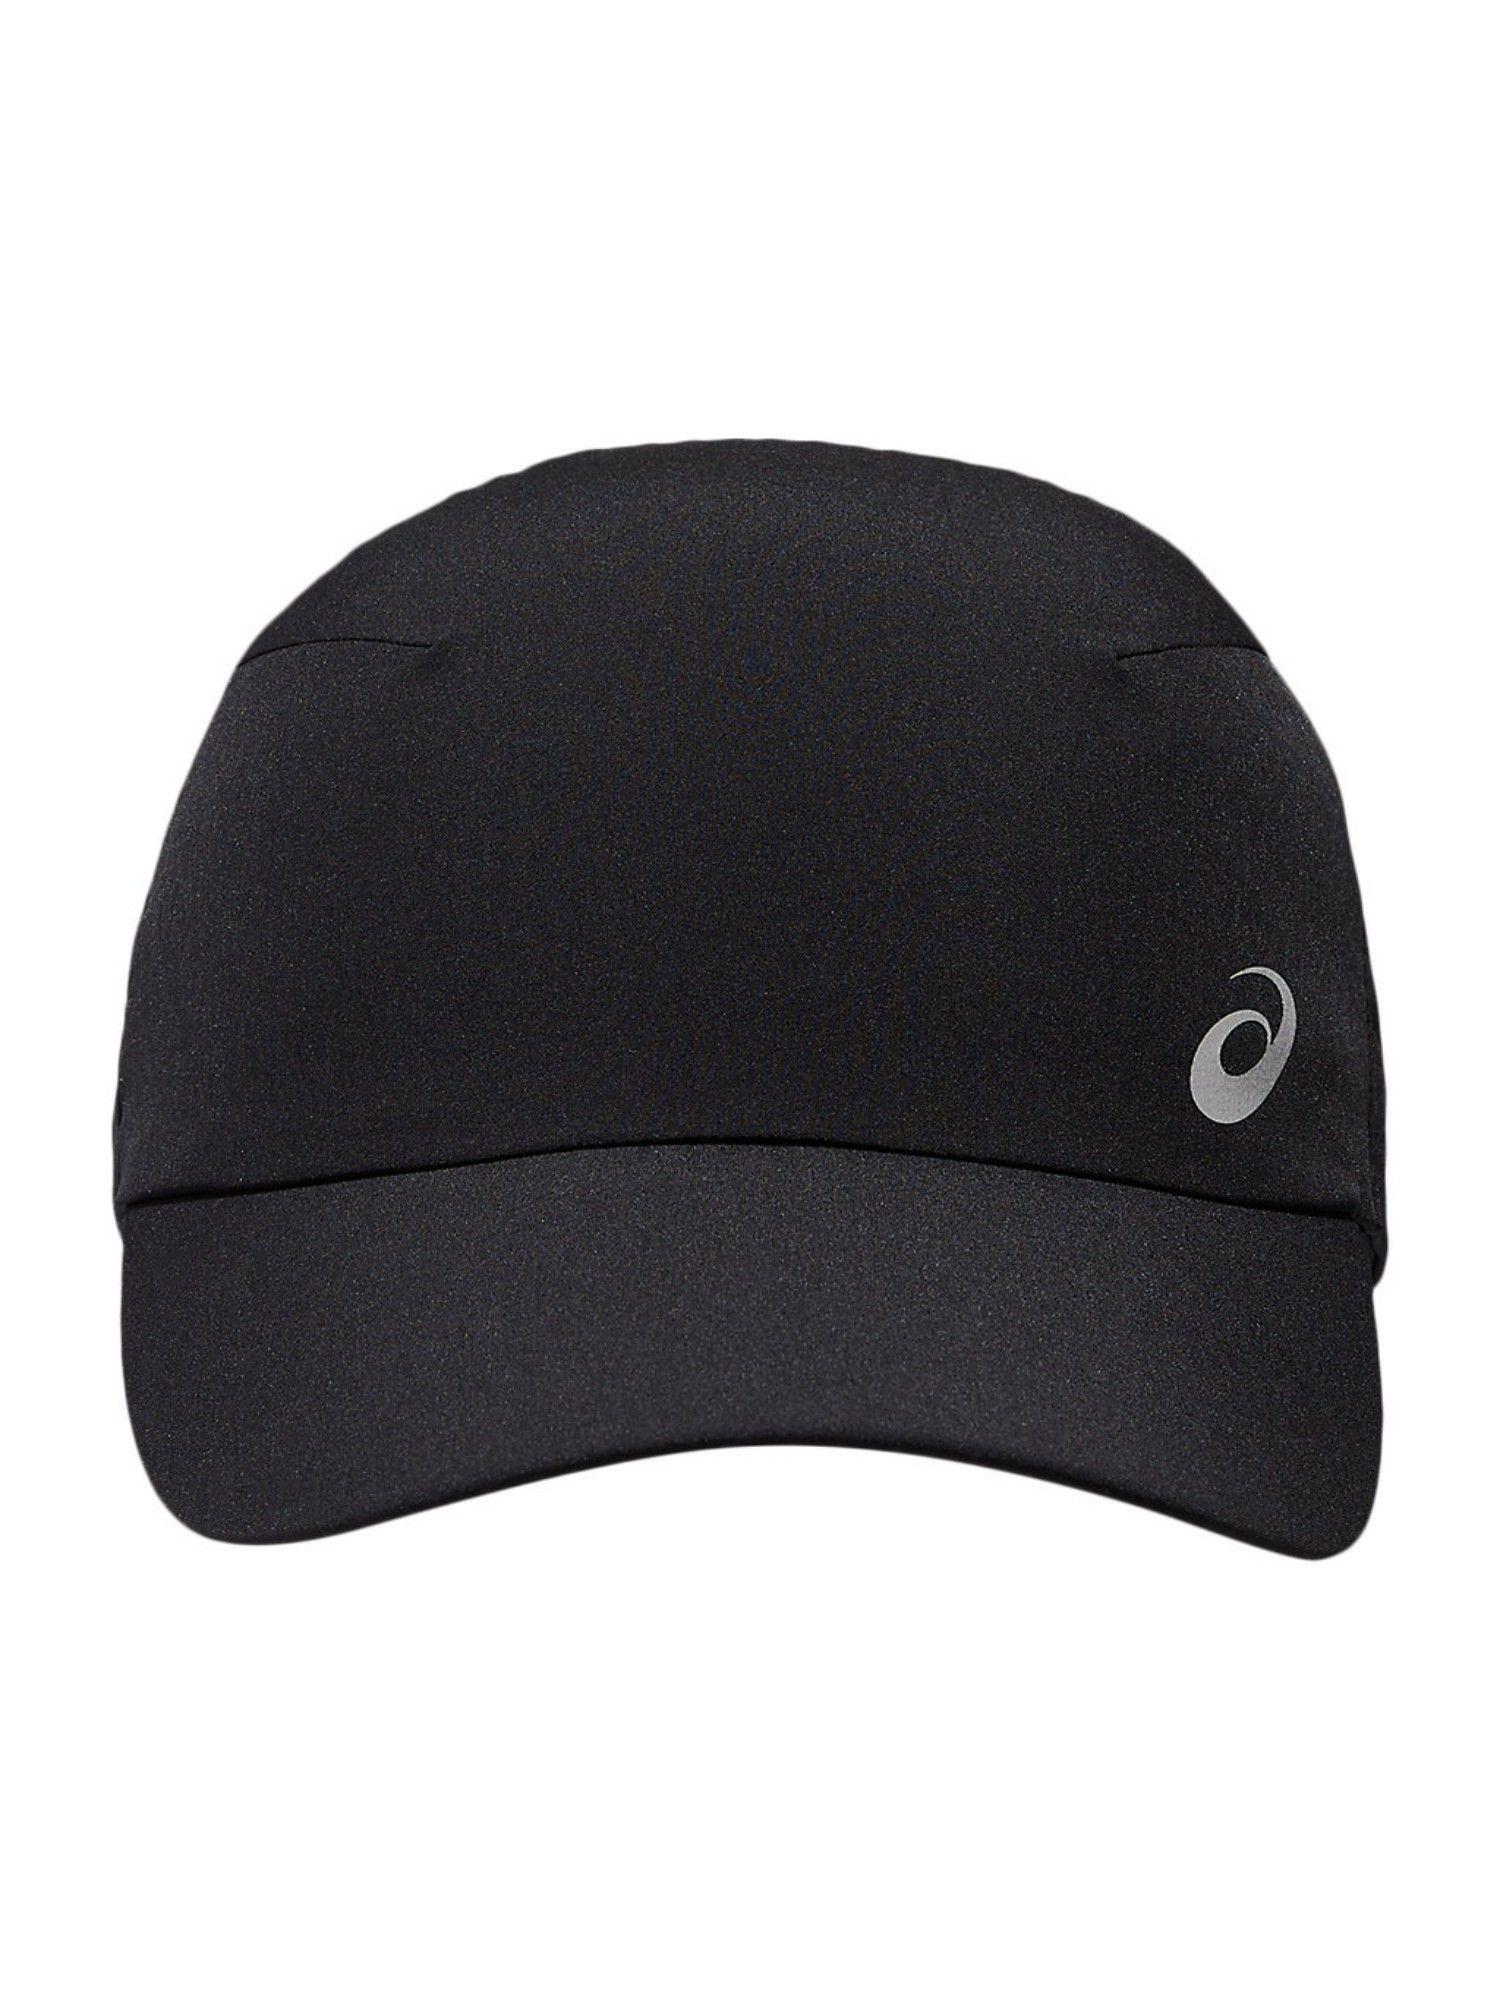 woven black unisex cap